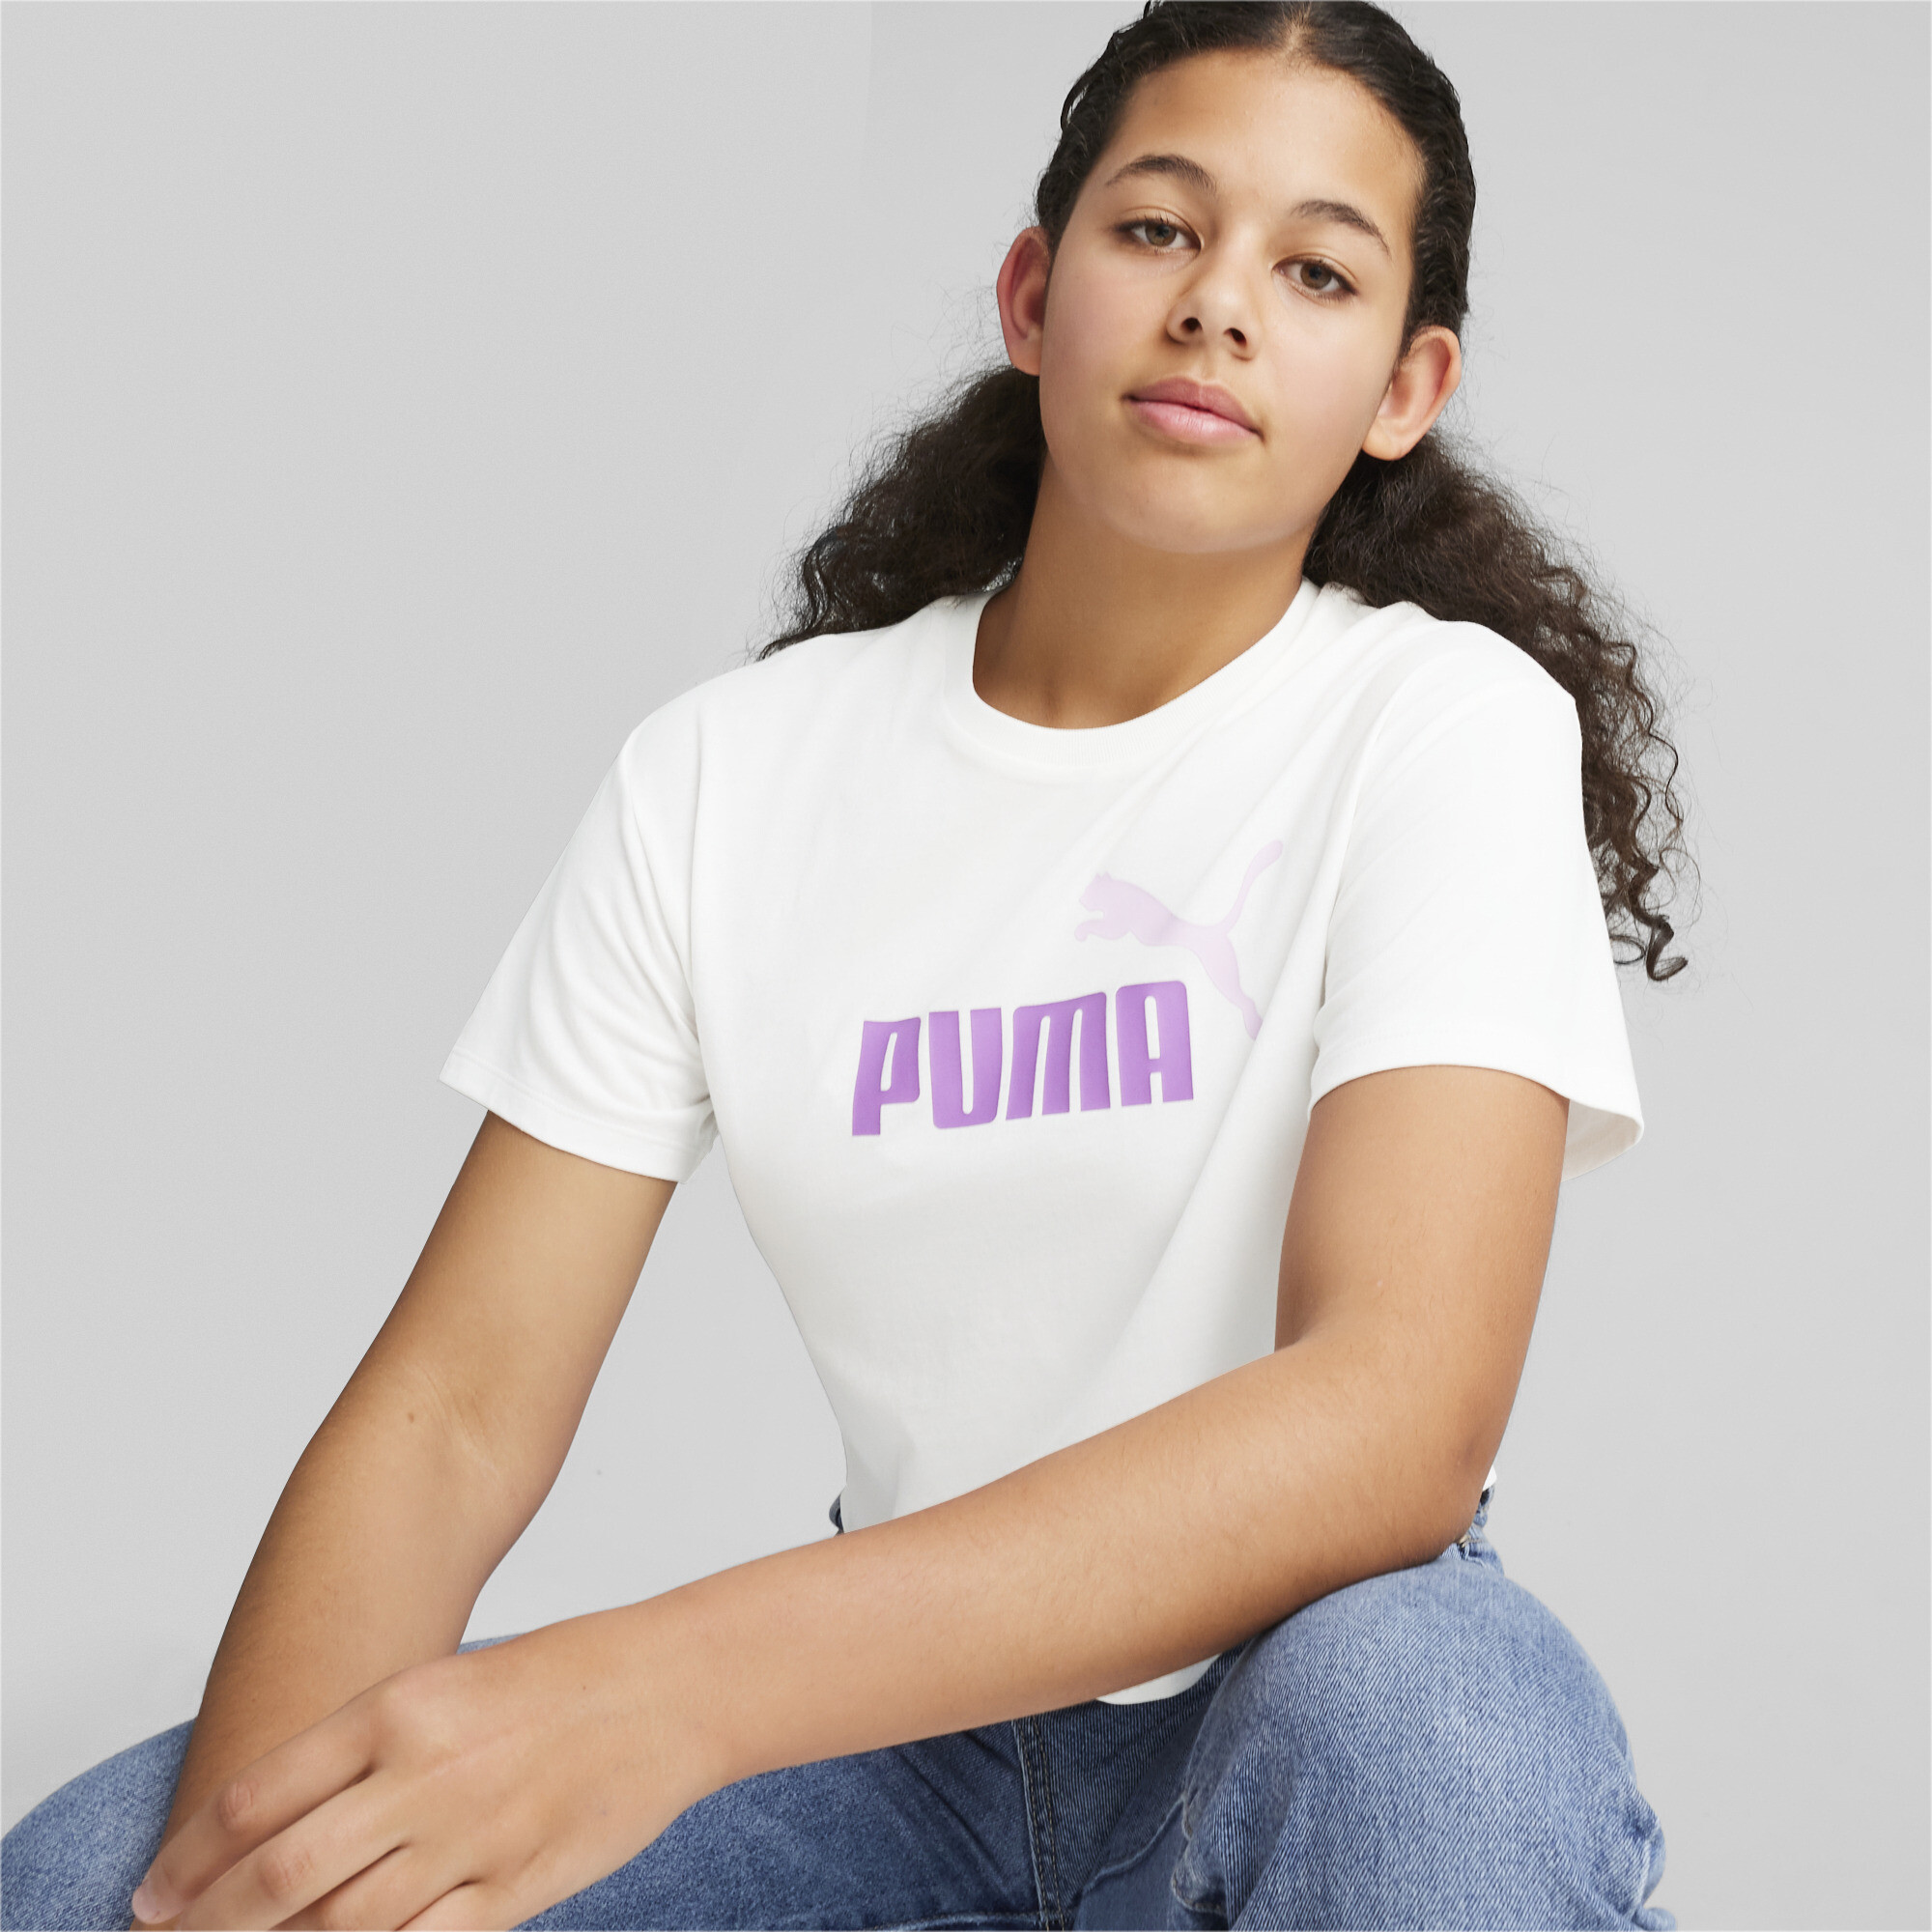 Puma Girls Logo Cropped Tee Youth, White, Size 12, Shop